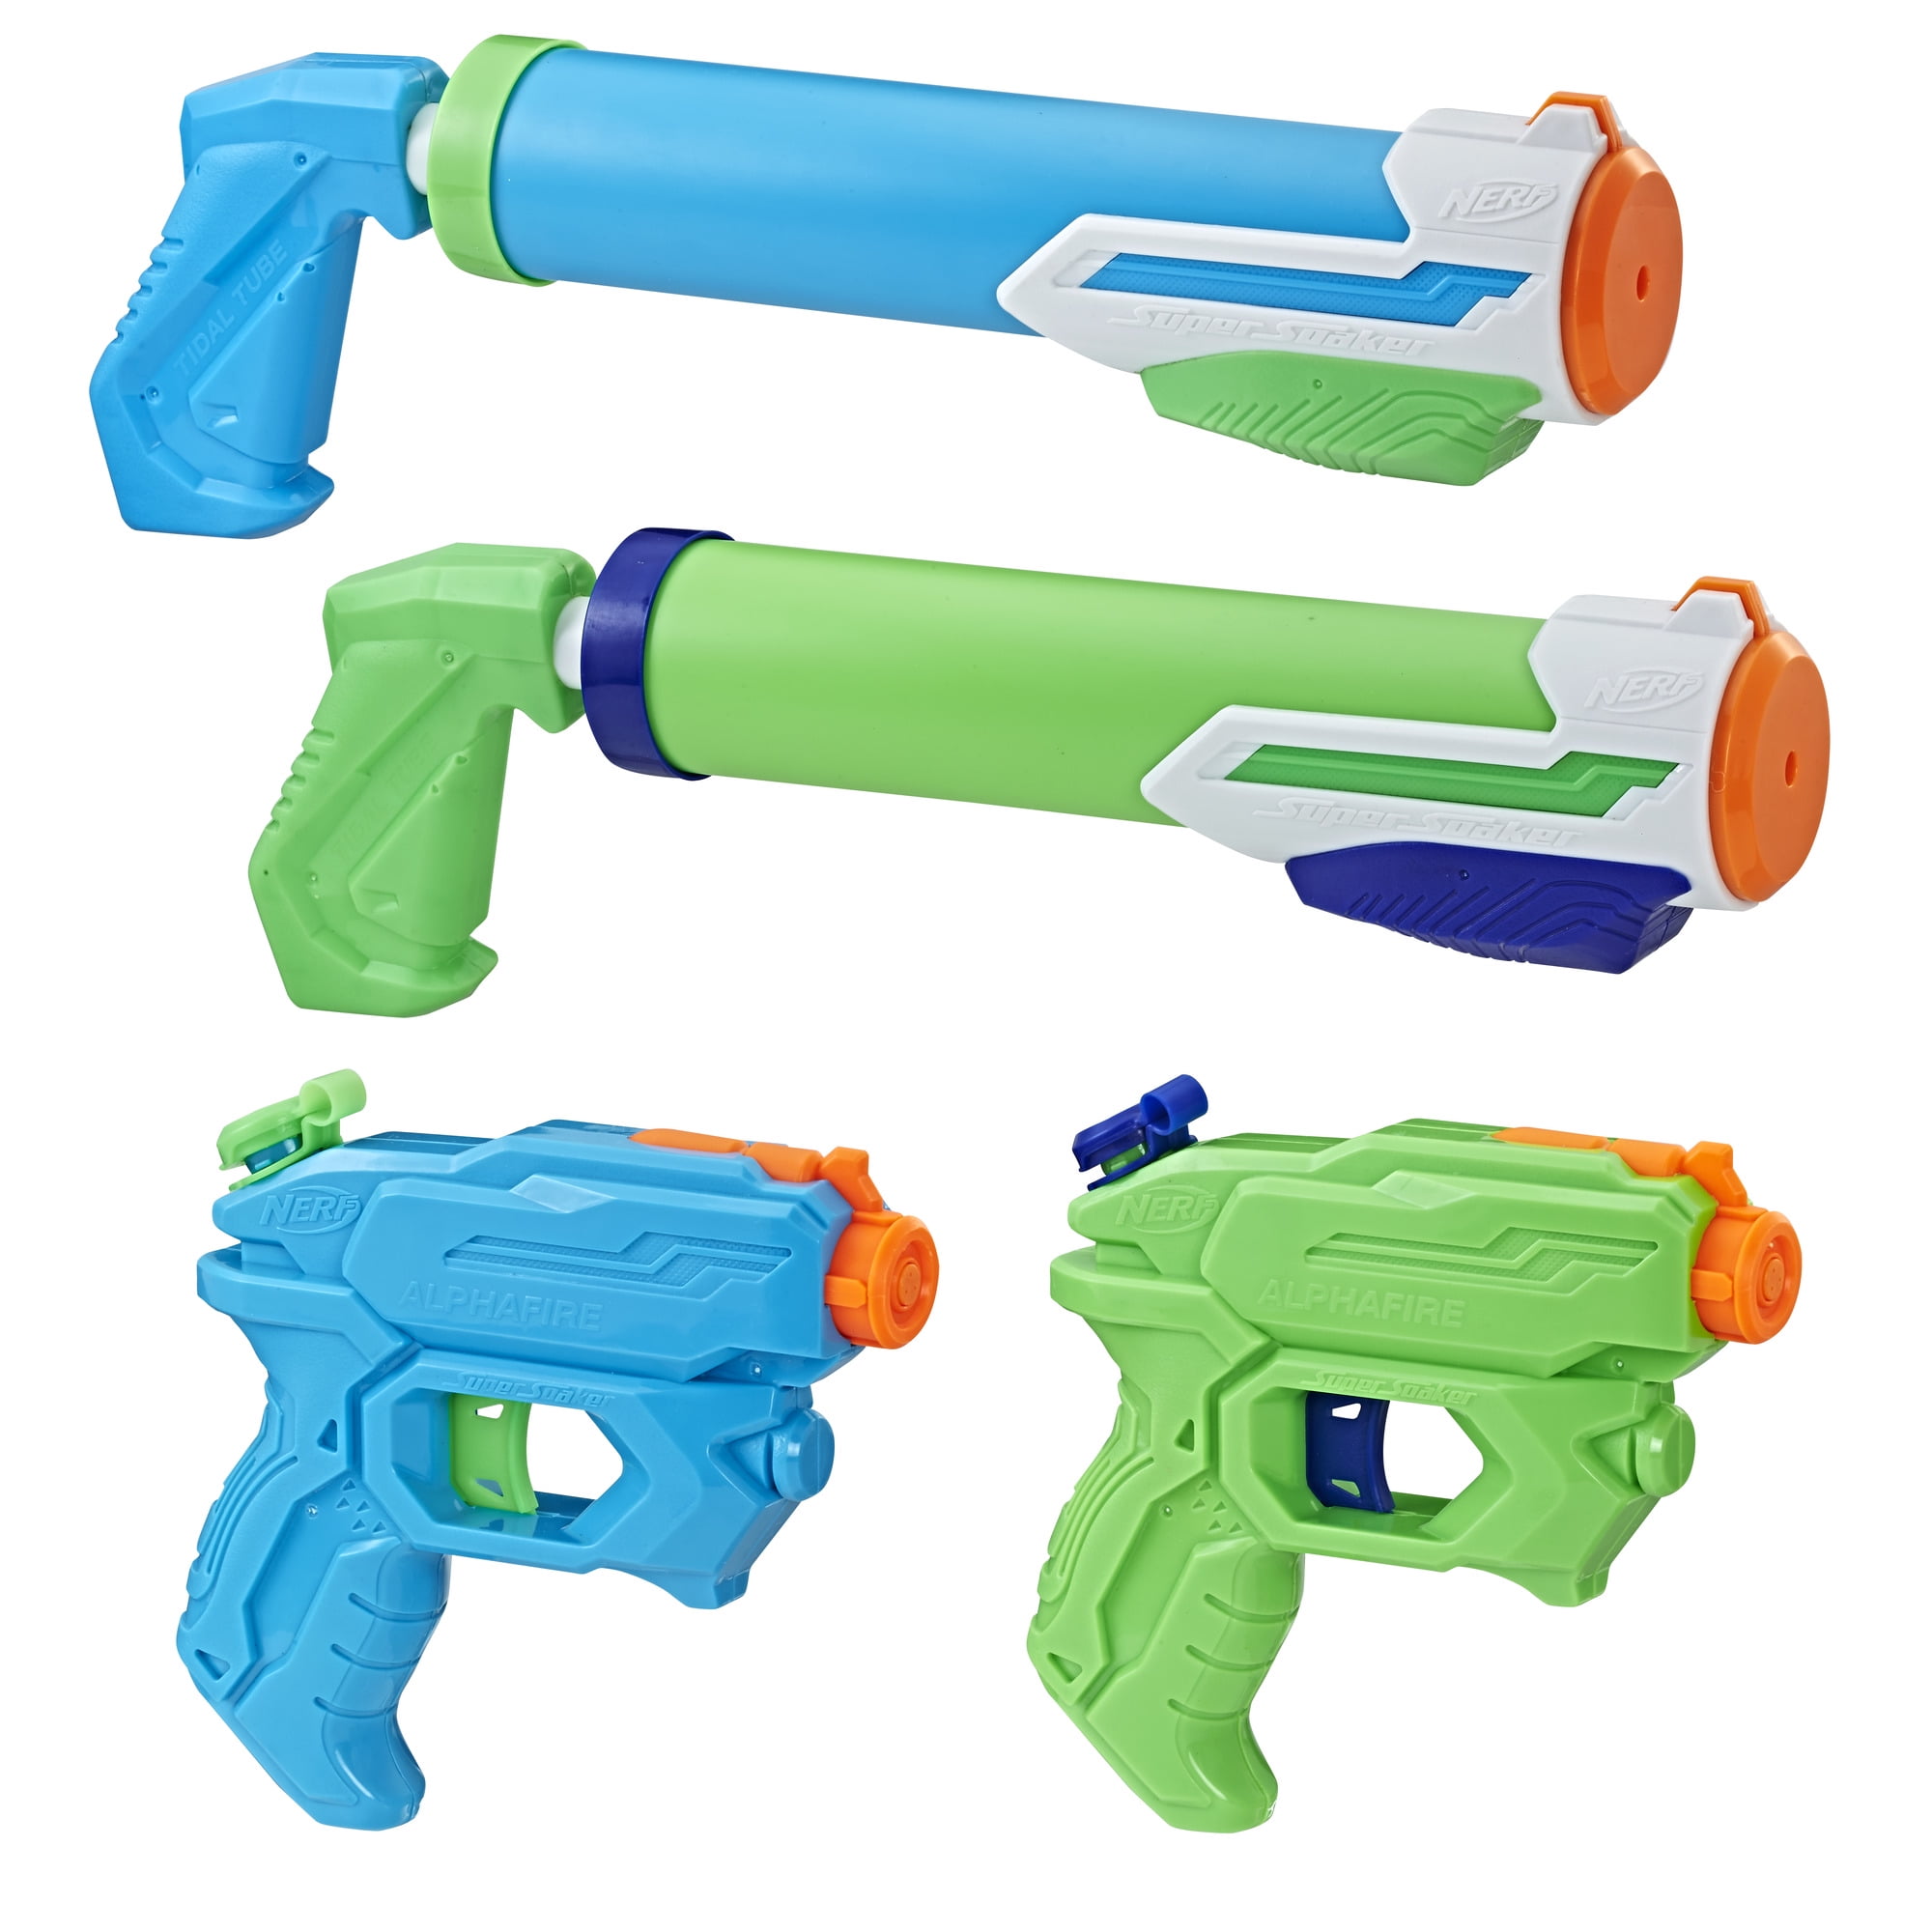 Nerf super soaker alphafire 3-stream water blasting water pistols outdoor toy 